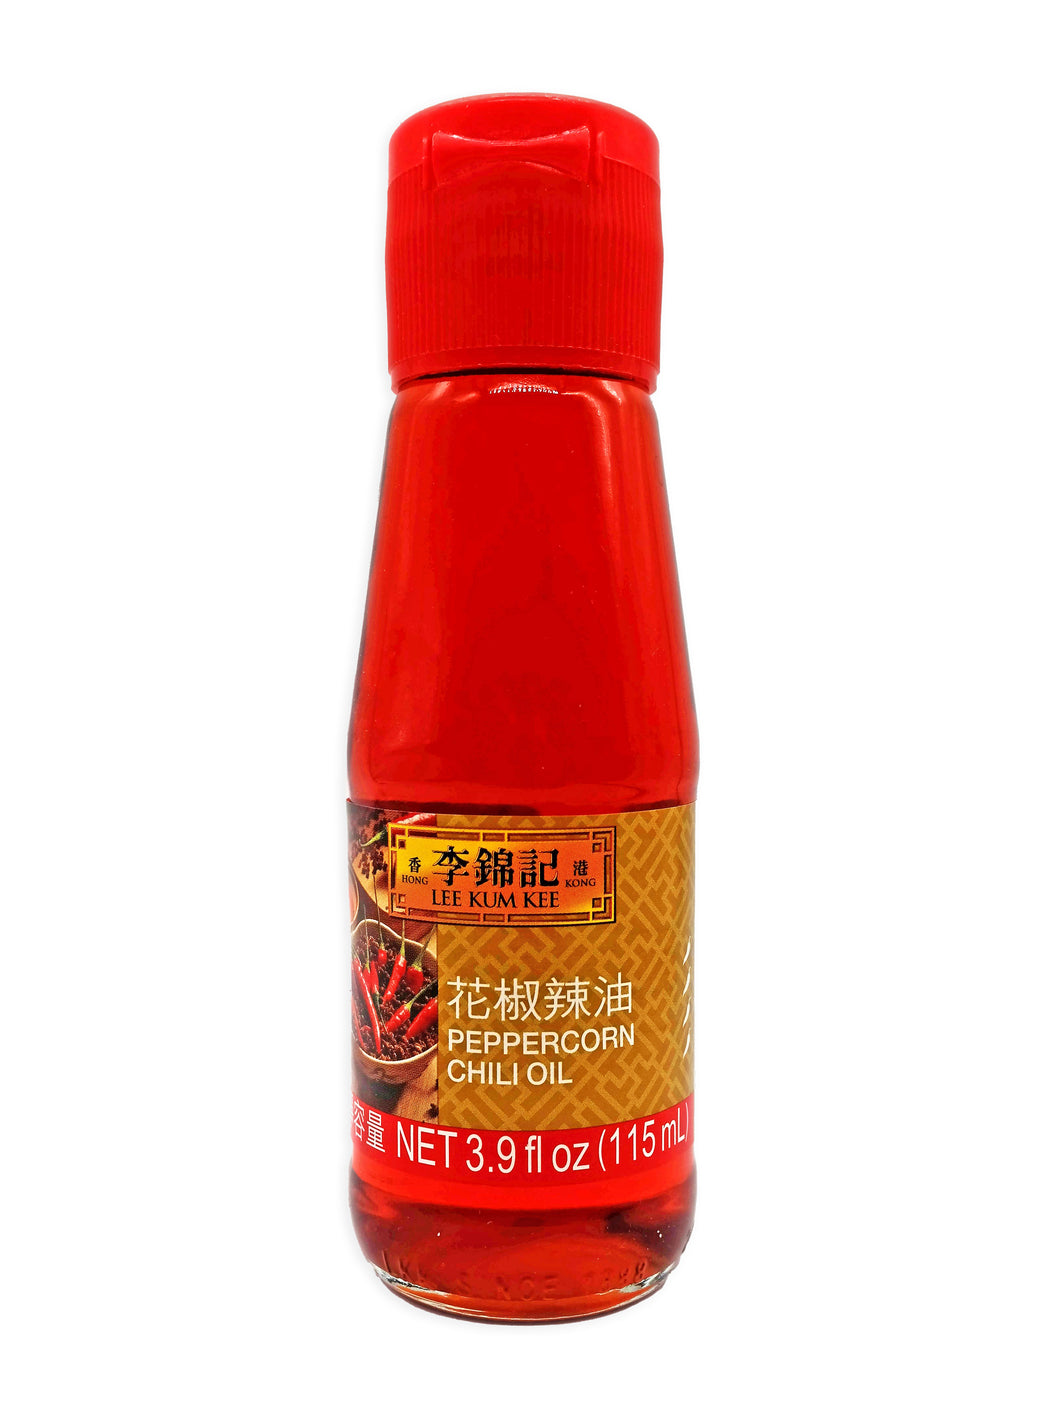 Lee Kum Kee Peppercorn Chili Oil